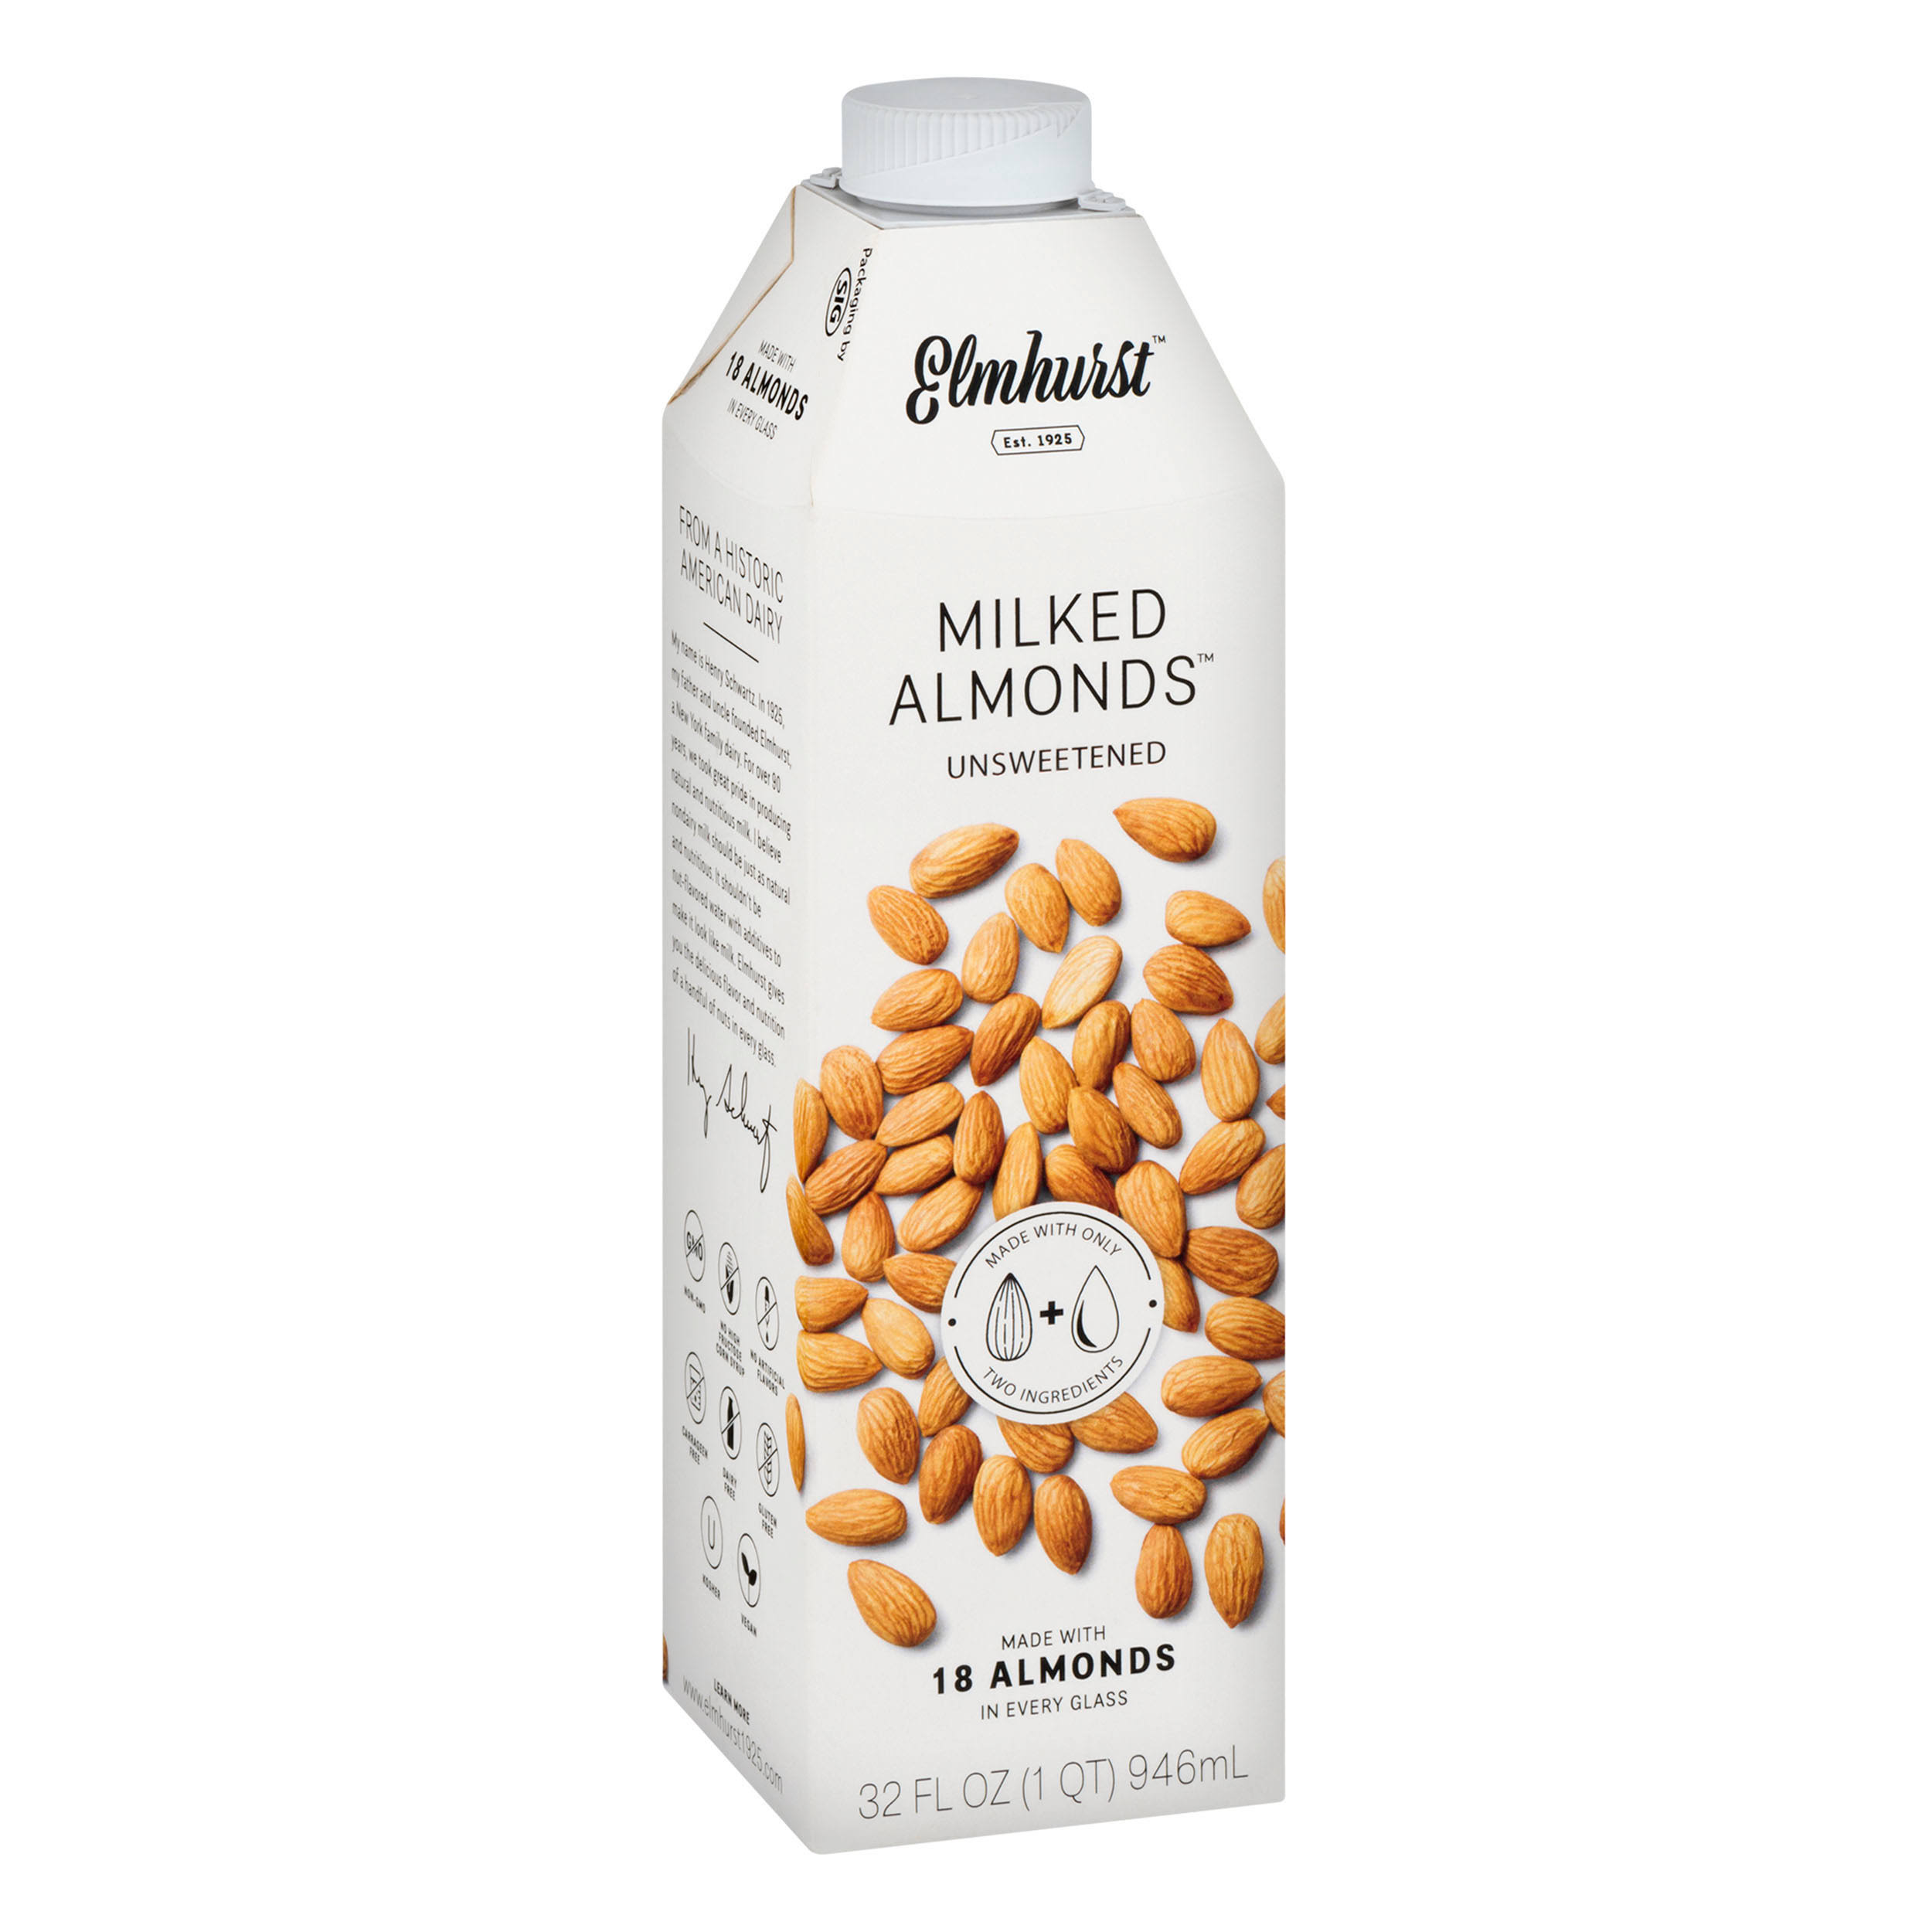 Elmhurst Unsweetened Milked Almonds - 32oz